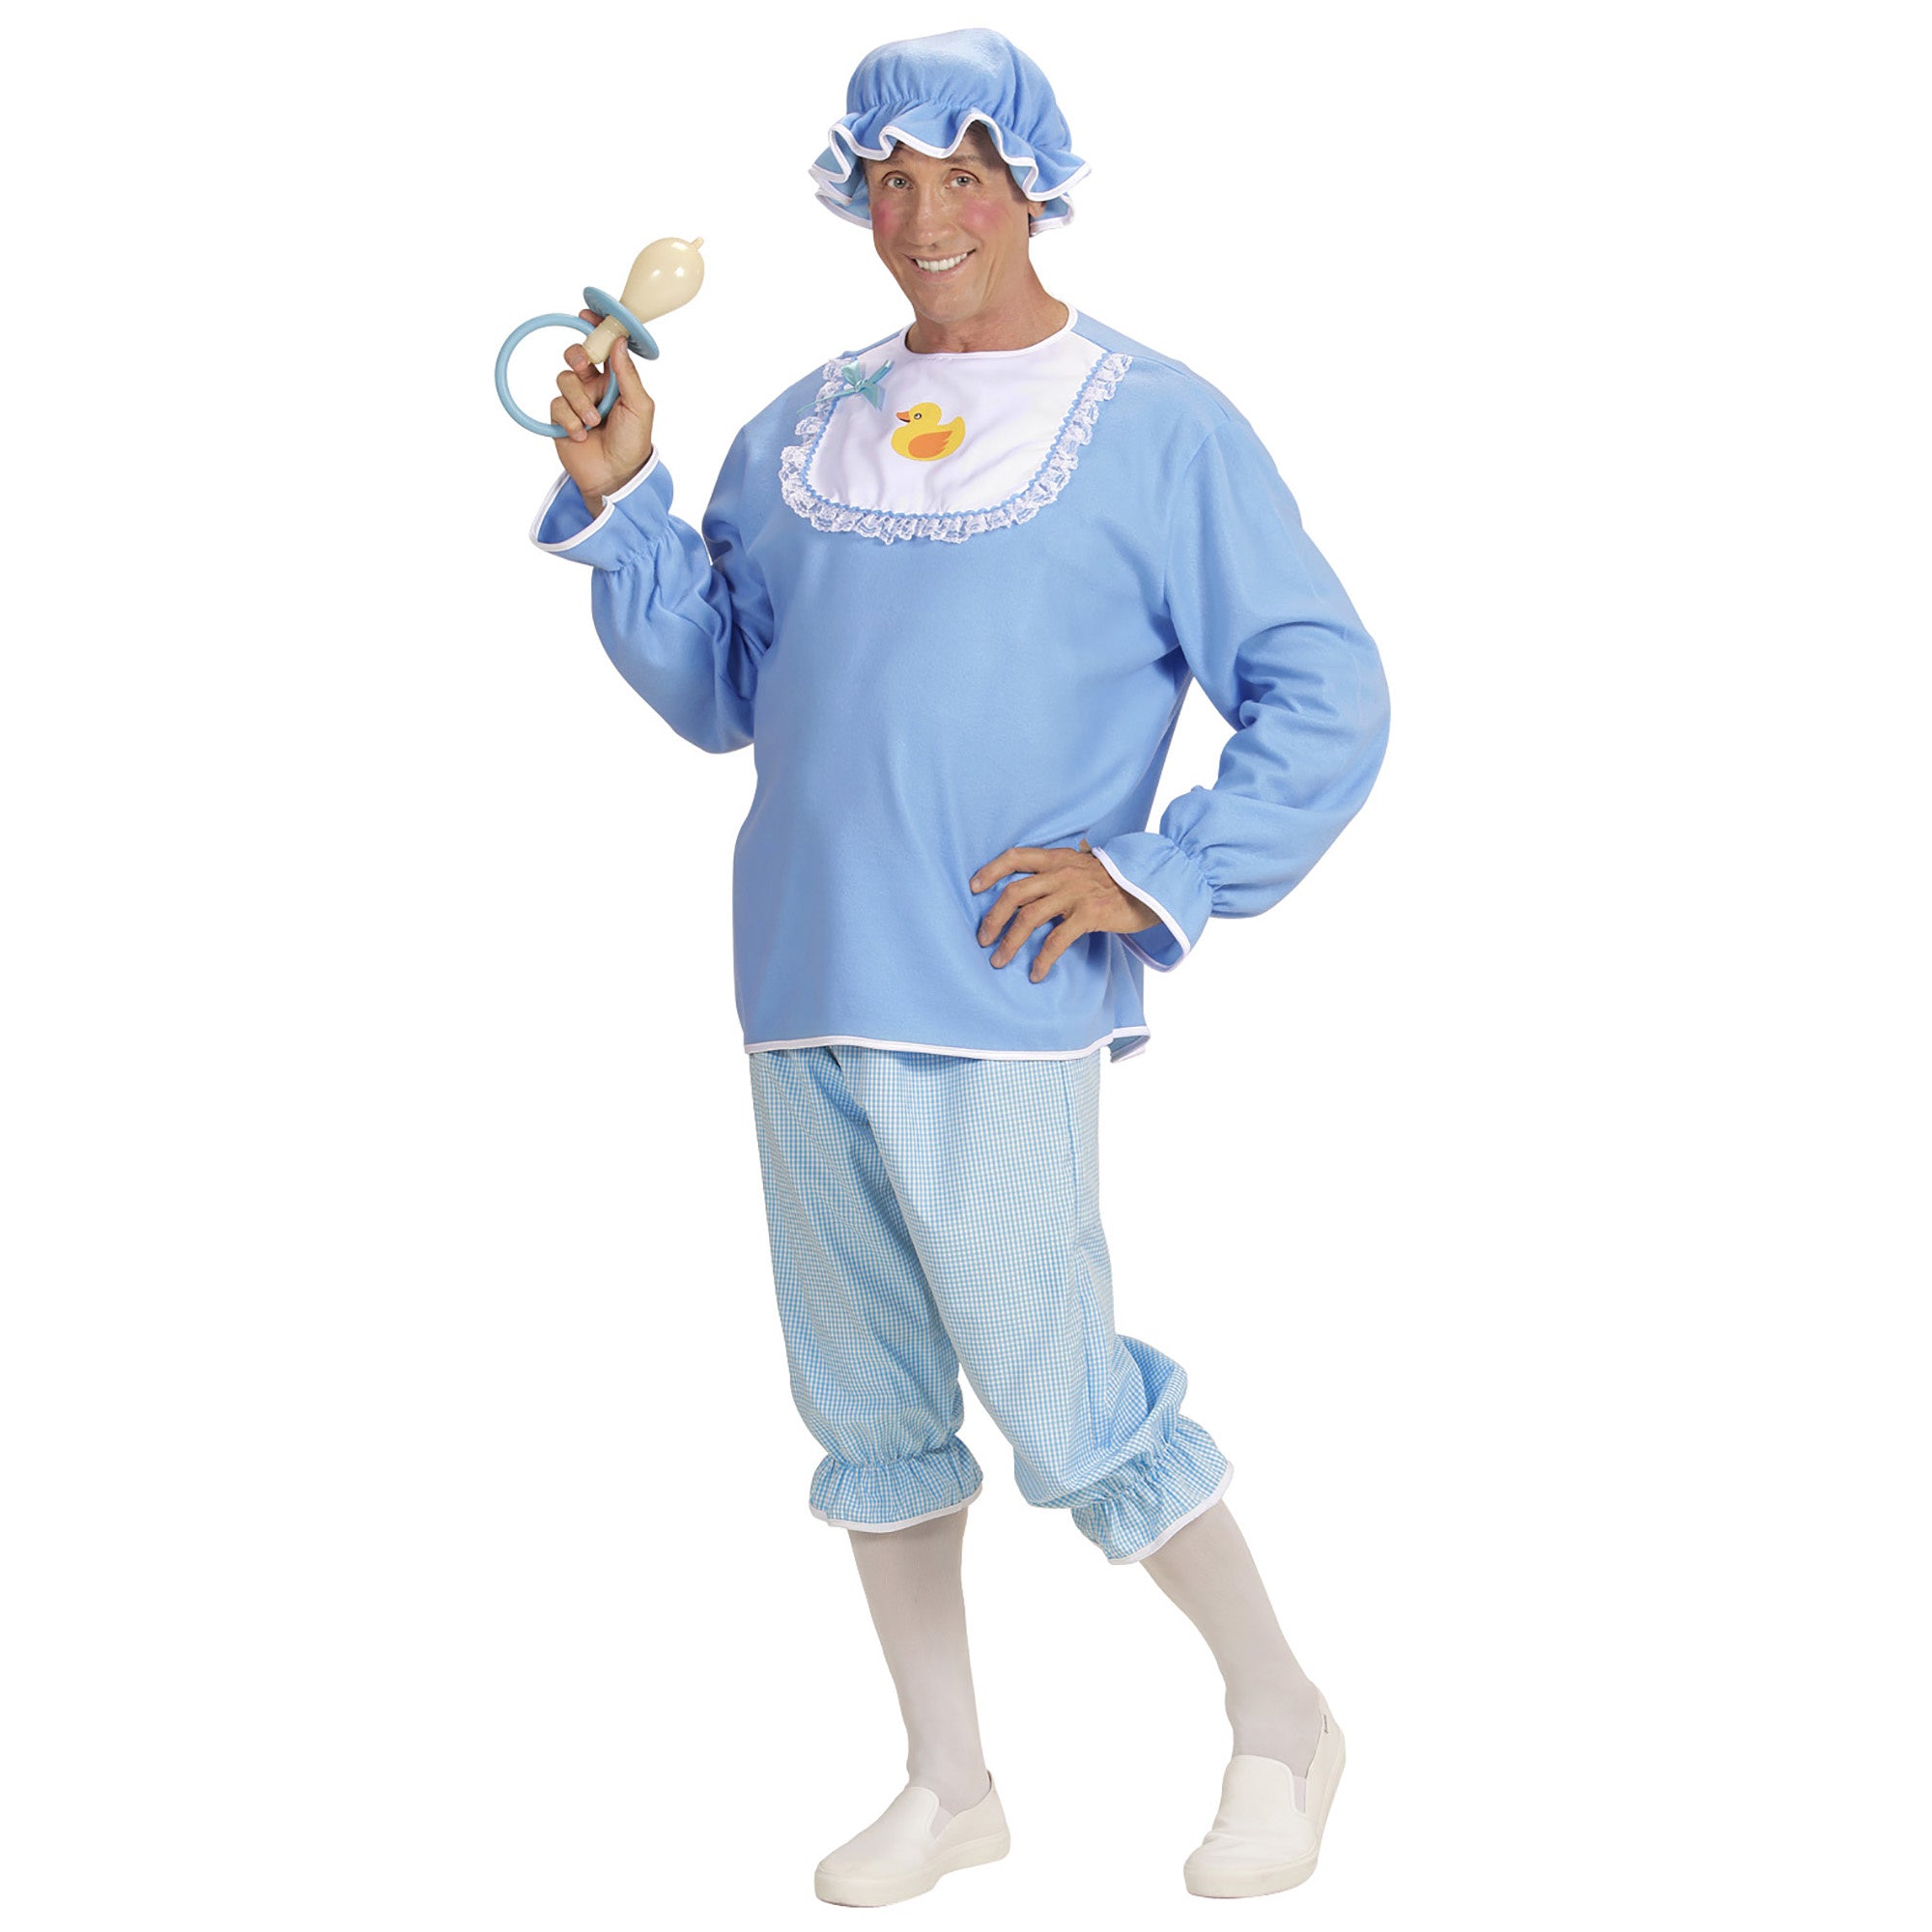 Widmann - Grote Baby Kostuum - Volwassen Baby Jongen - Man - blauw - Medium - Carnavalskleding - Verkleedkleding